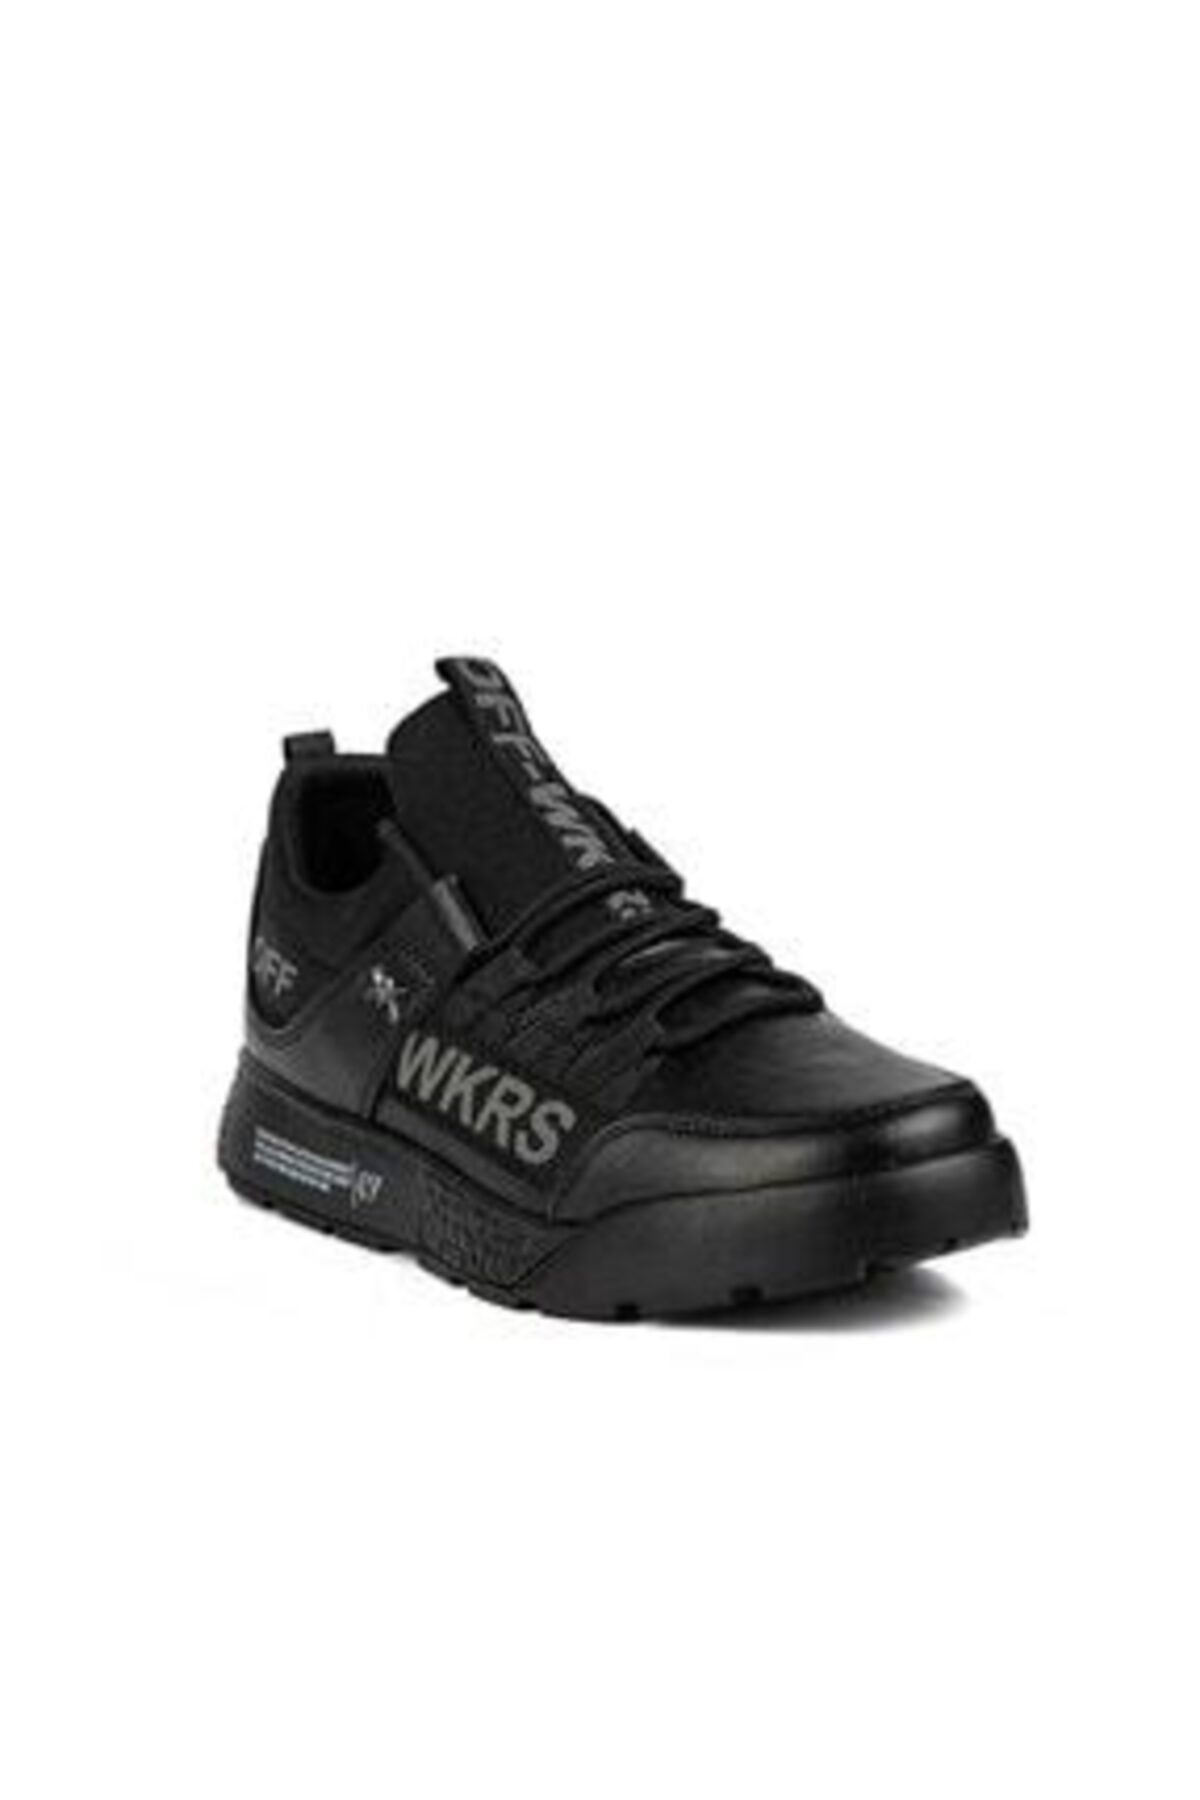 Wickers Unisex Siyah Spor Ayakkabı